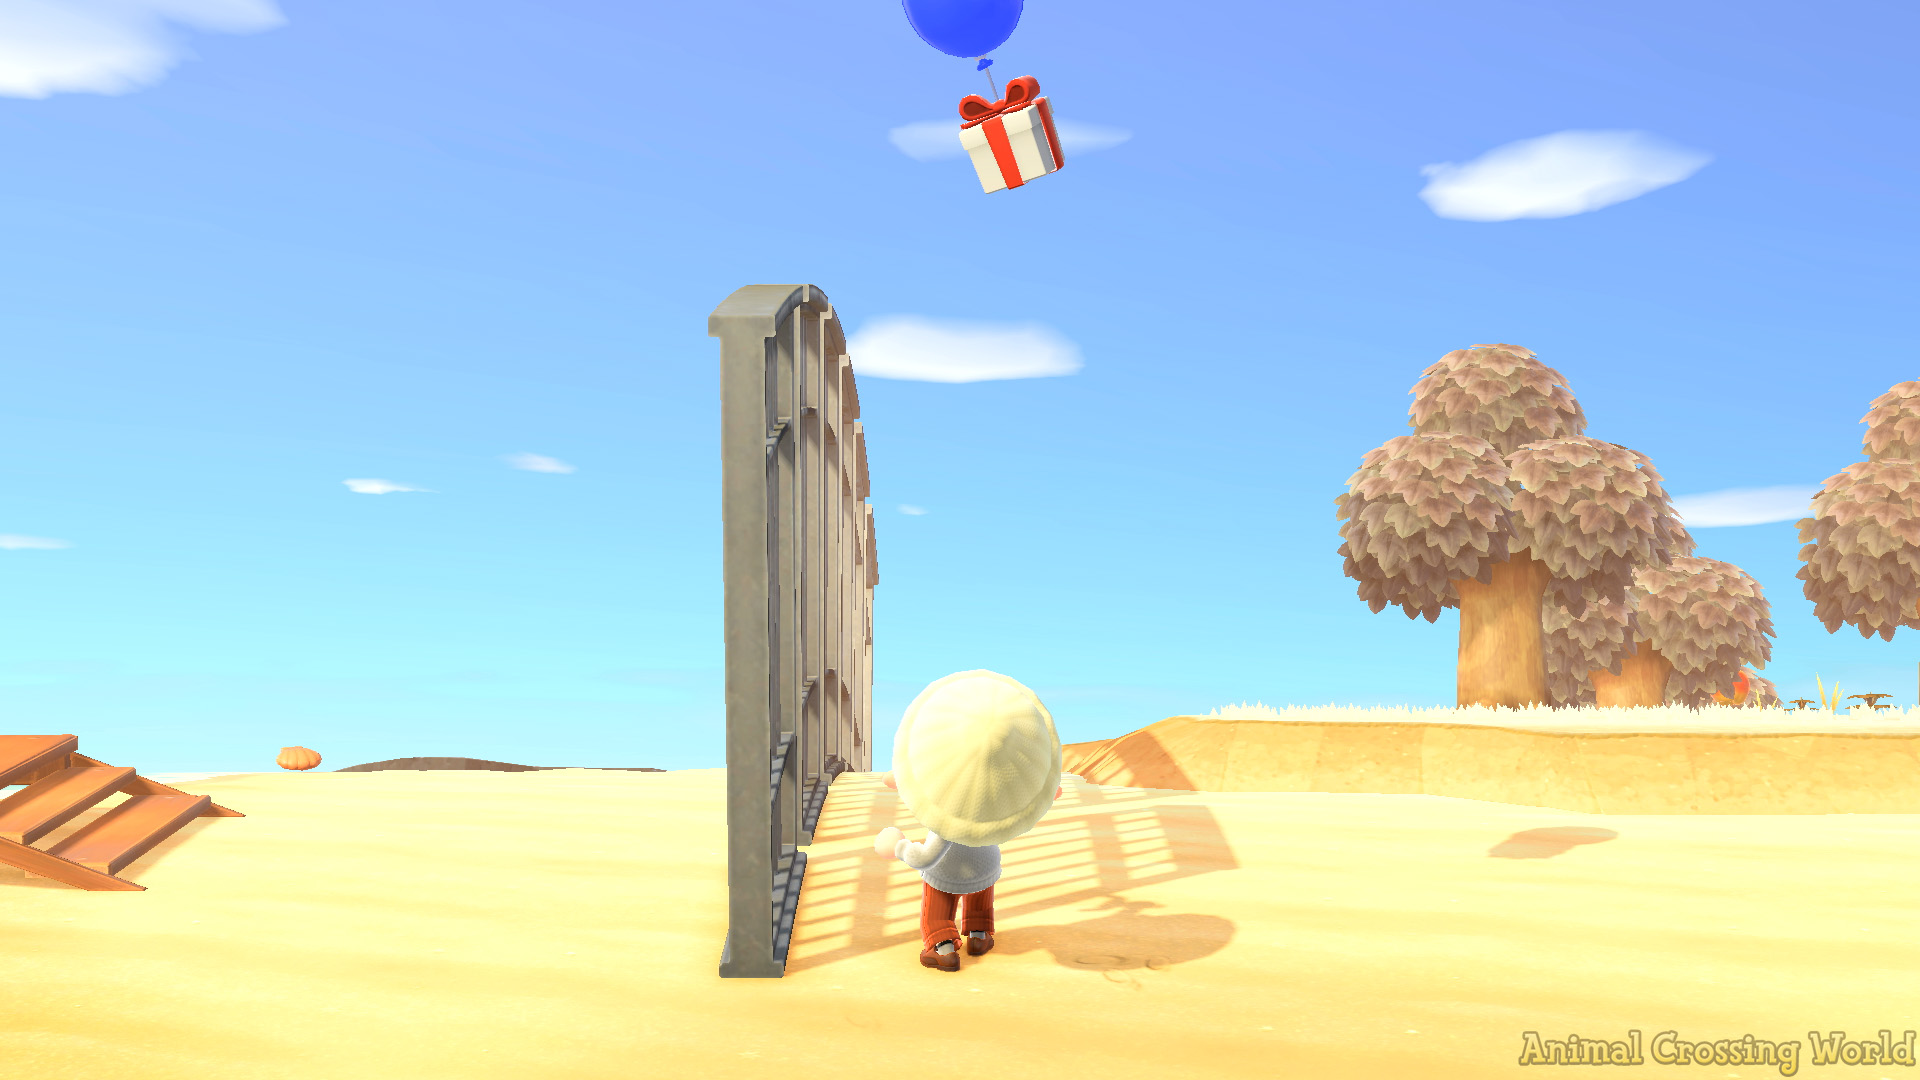 Farm Diy Recipe Balloons Easy Using Jail Bars Wall Trick In Animal Crossing New Horizons Guide Animal Crossing World